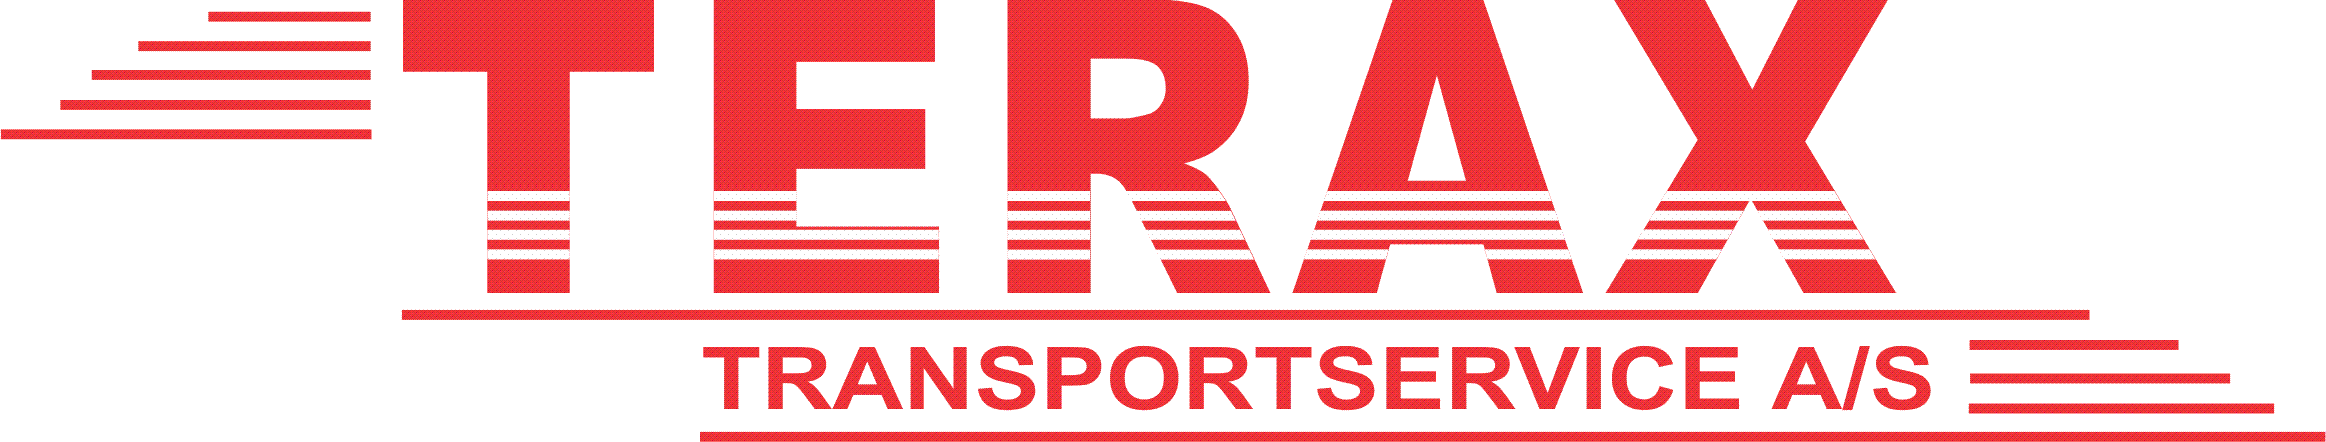 Terax Transportservice AS